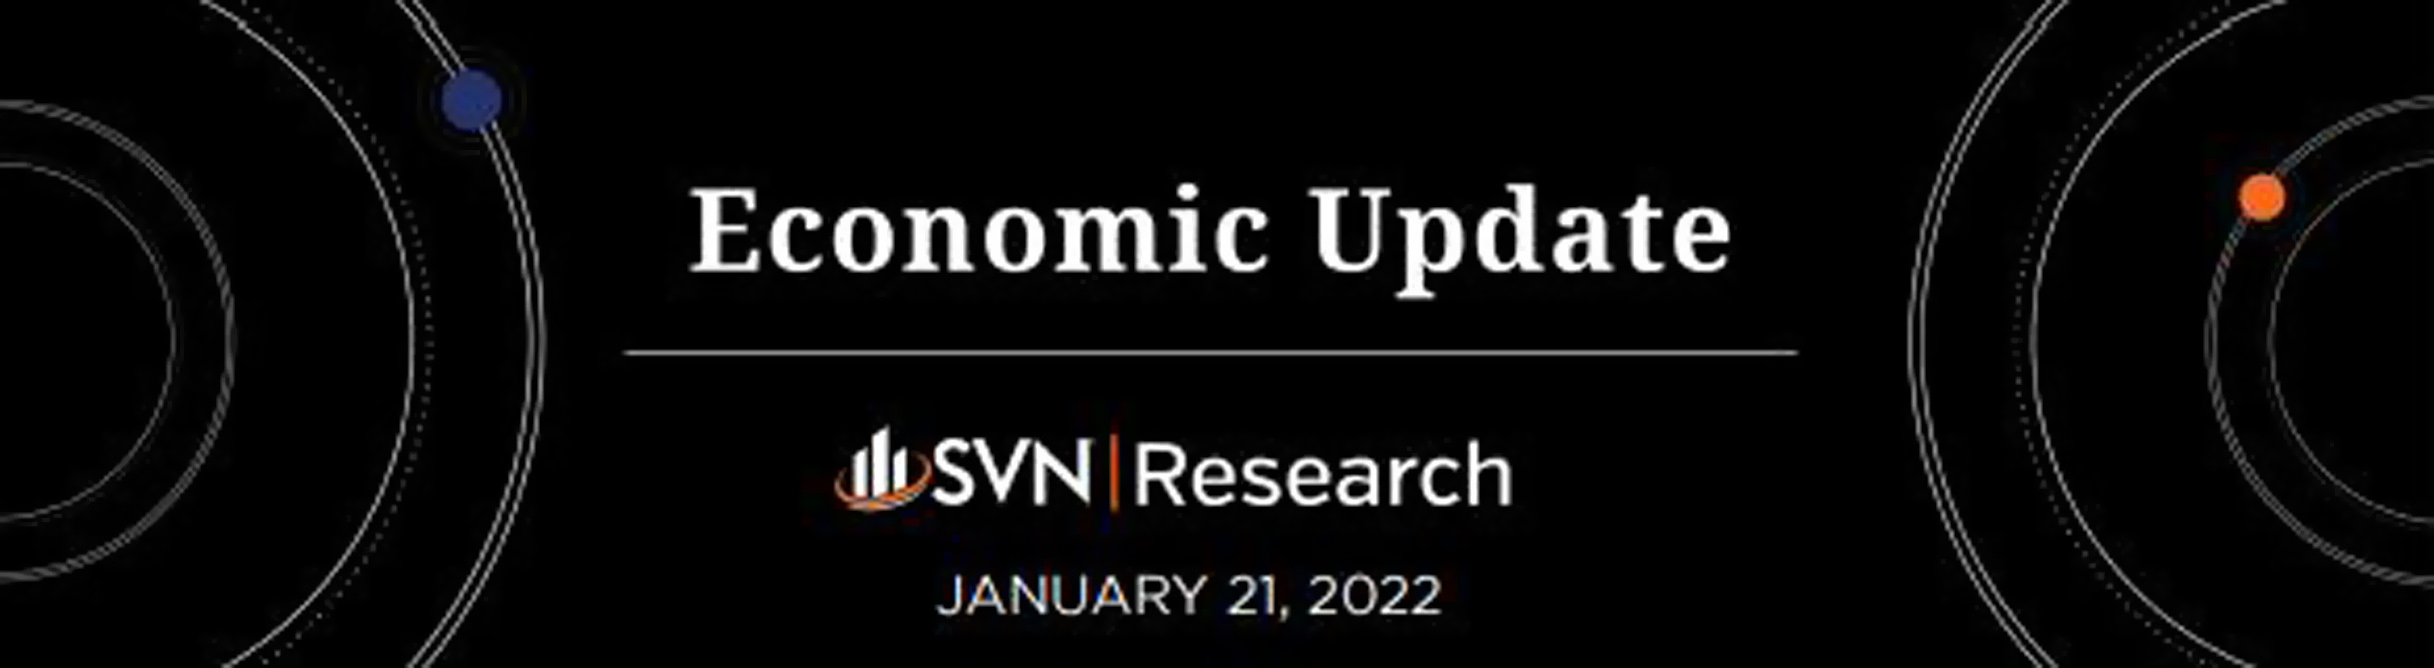 SVN | Research Economic Update 1.21.2022